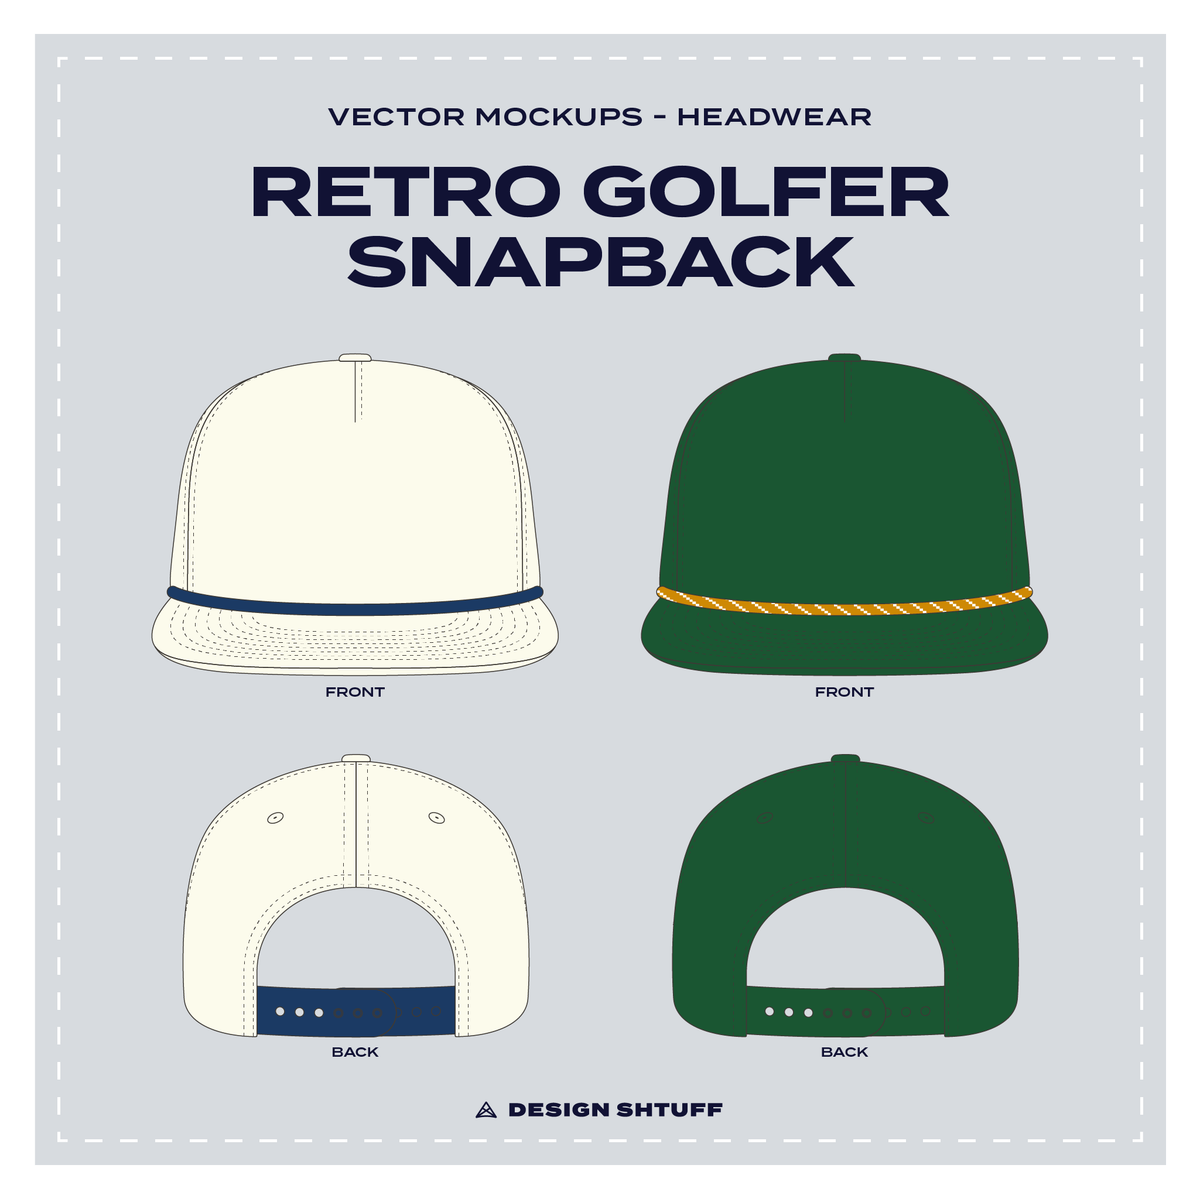 Retro Golfer Snapback Vector Mockup